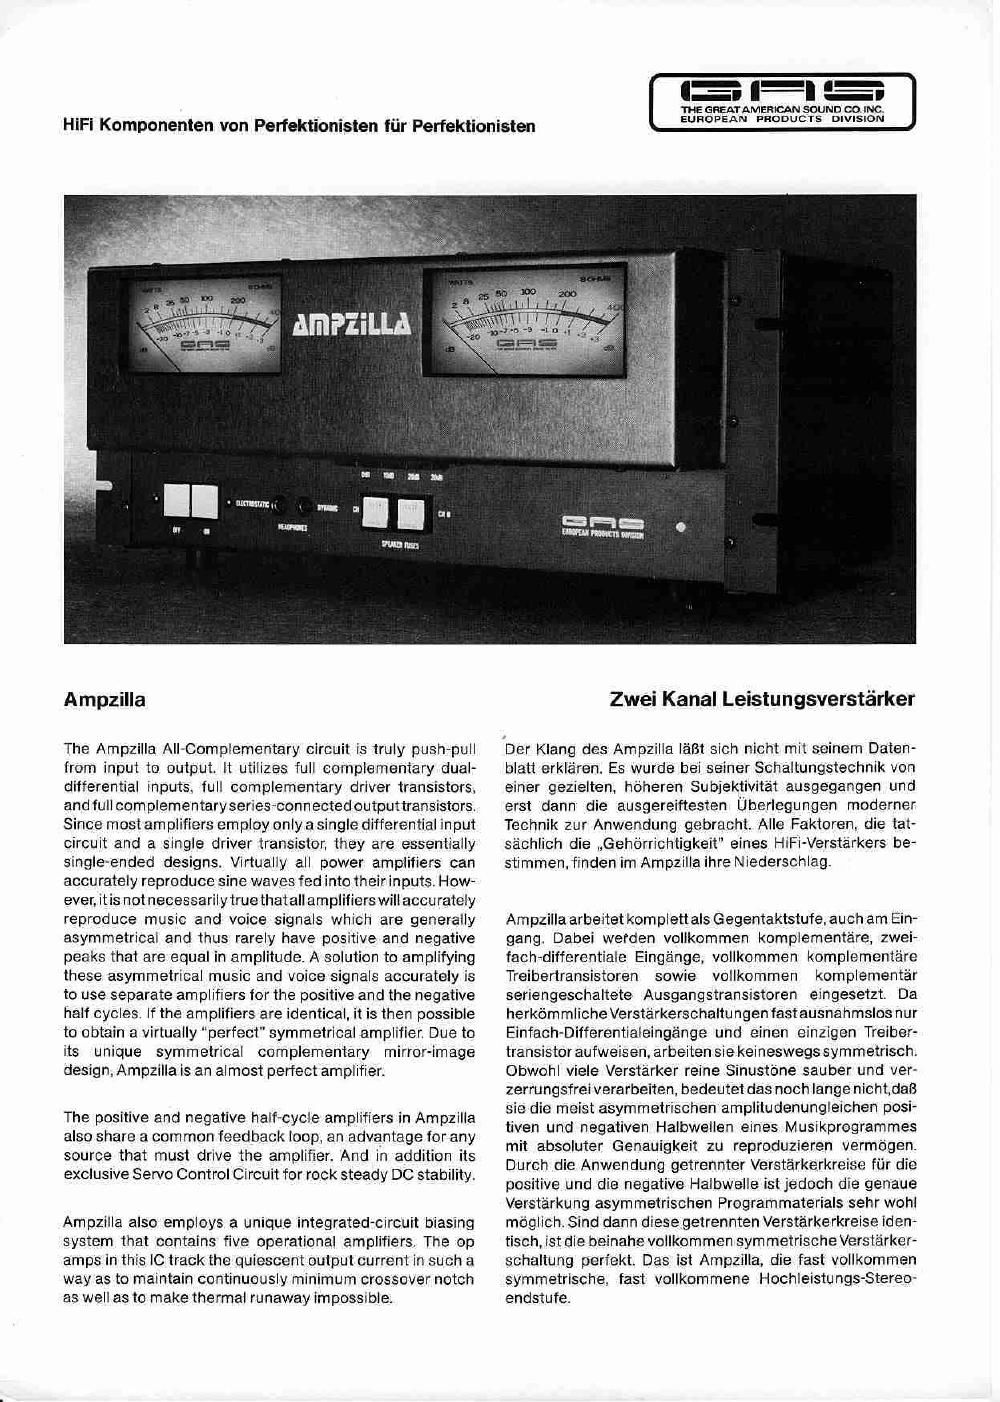 gas ampzilla article